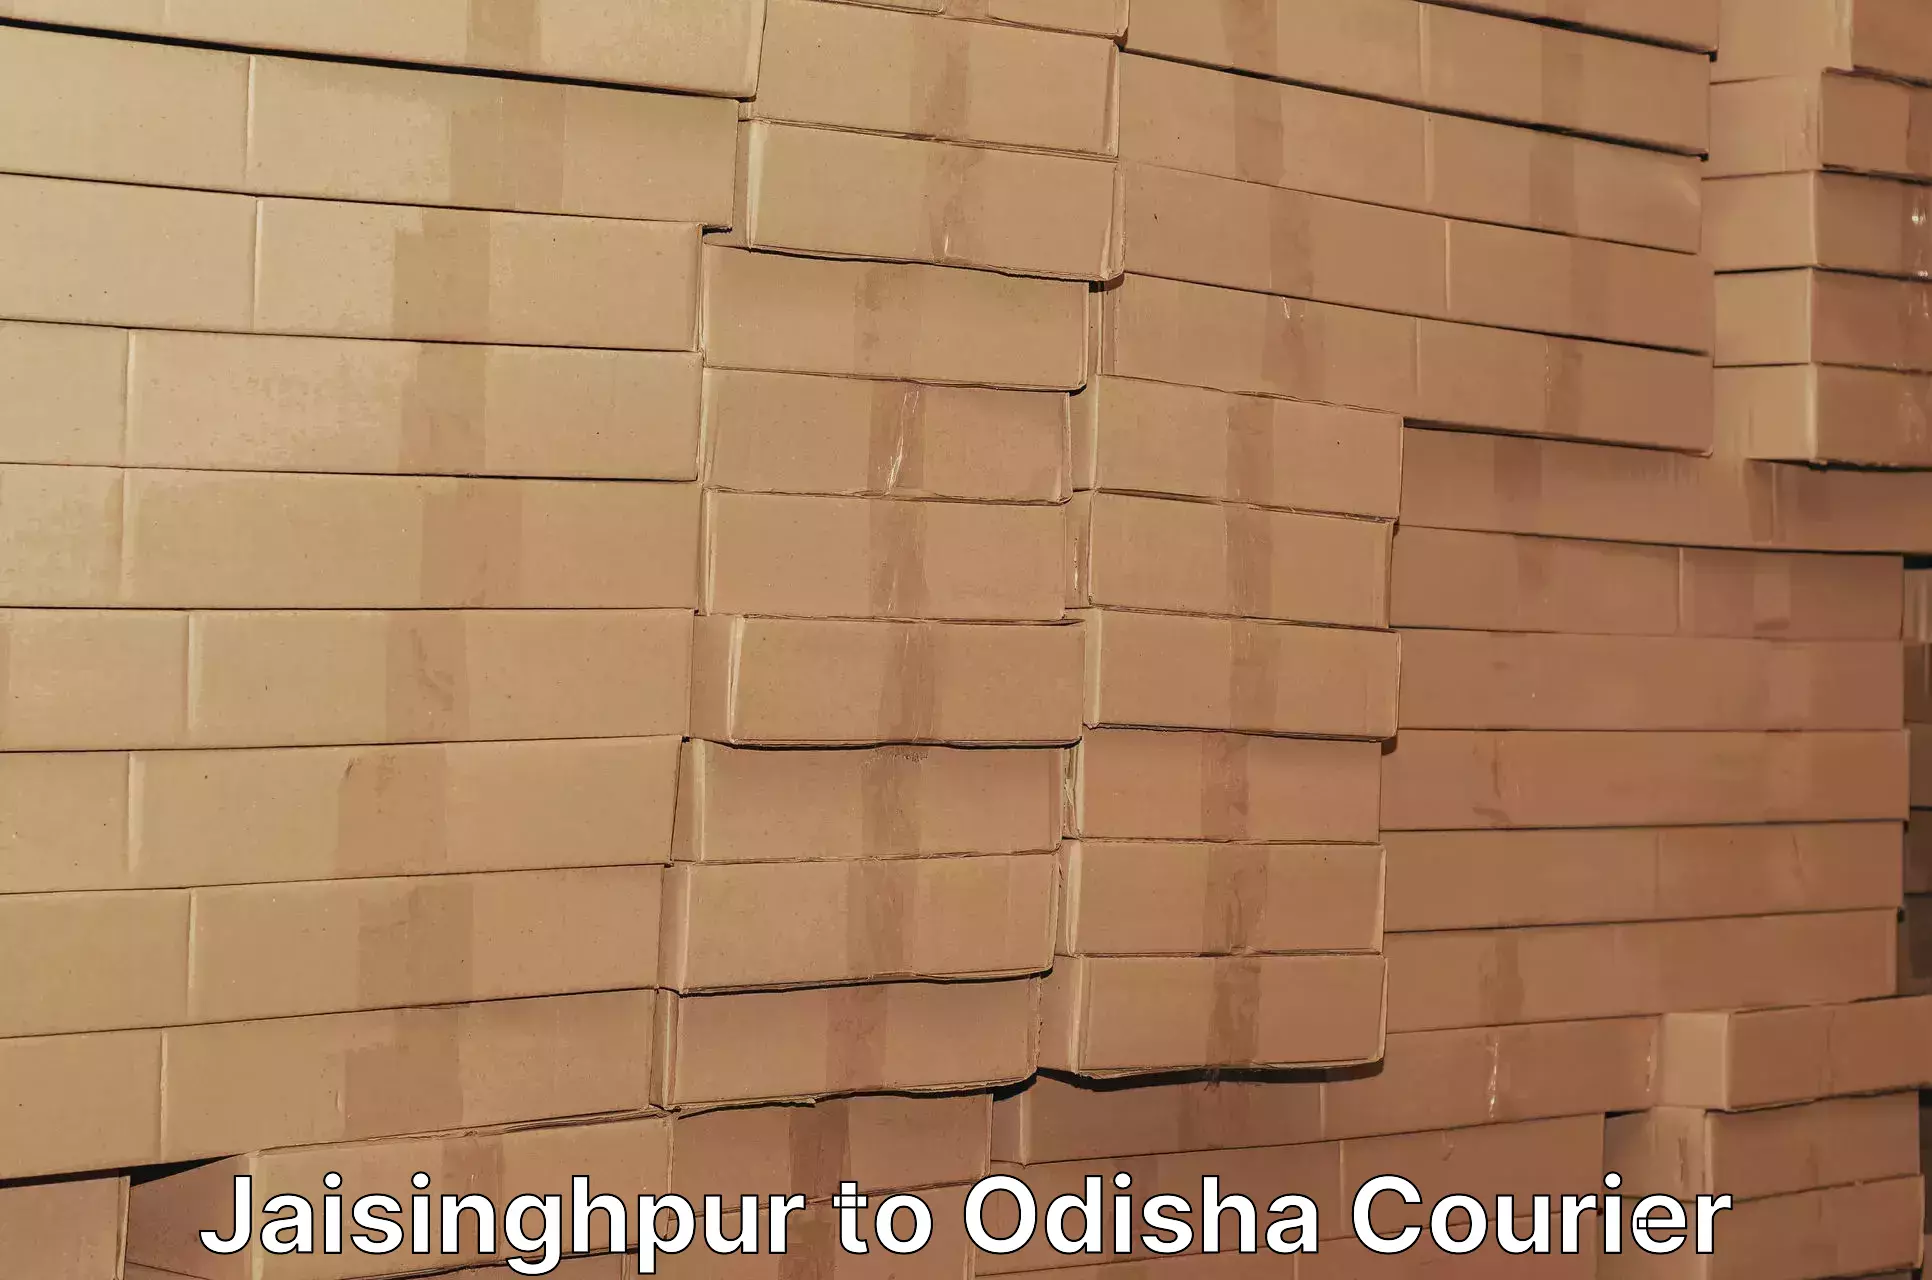 Multi-service courier options in Jaisinghpur to Konark